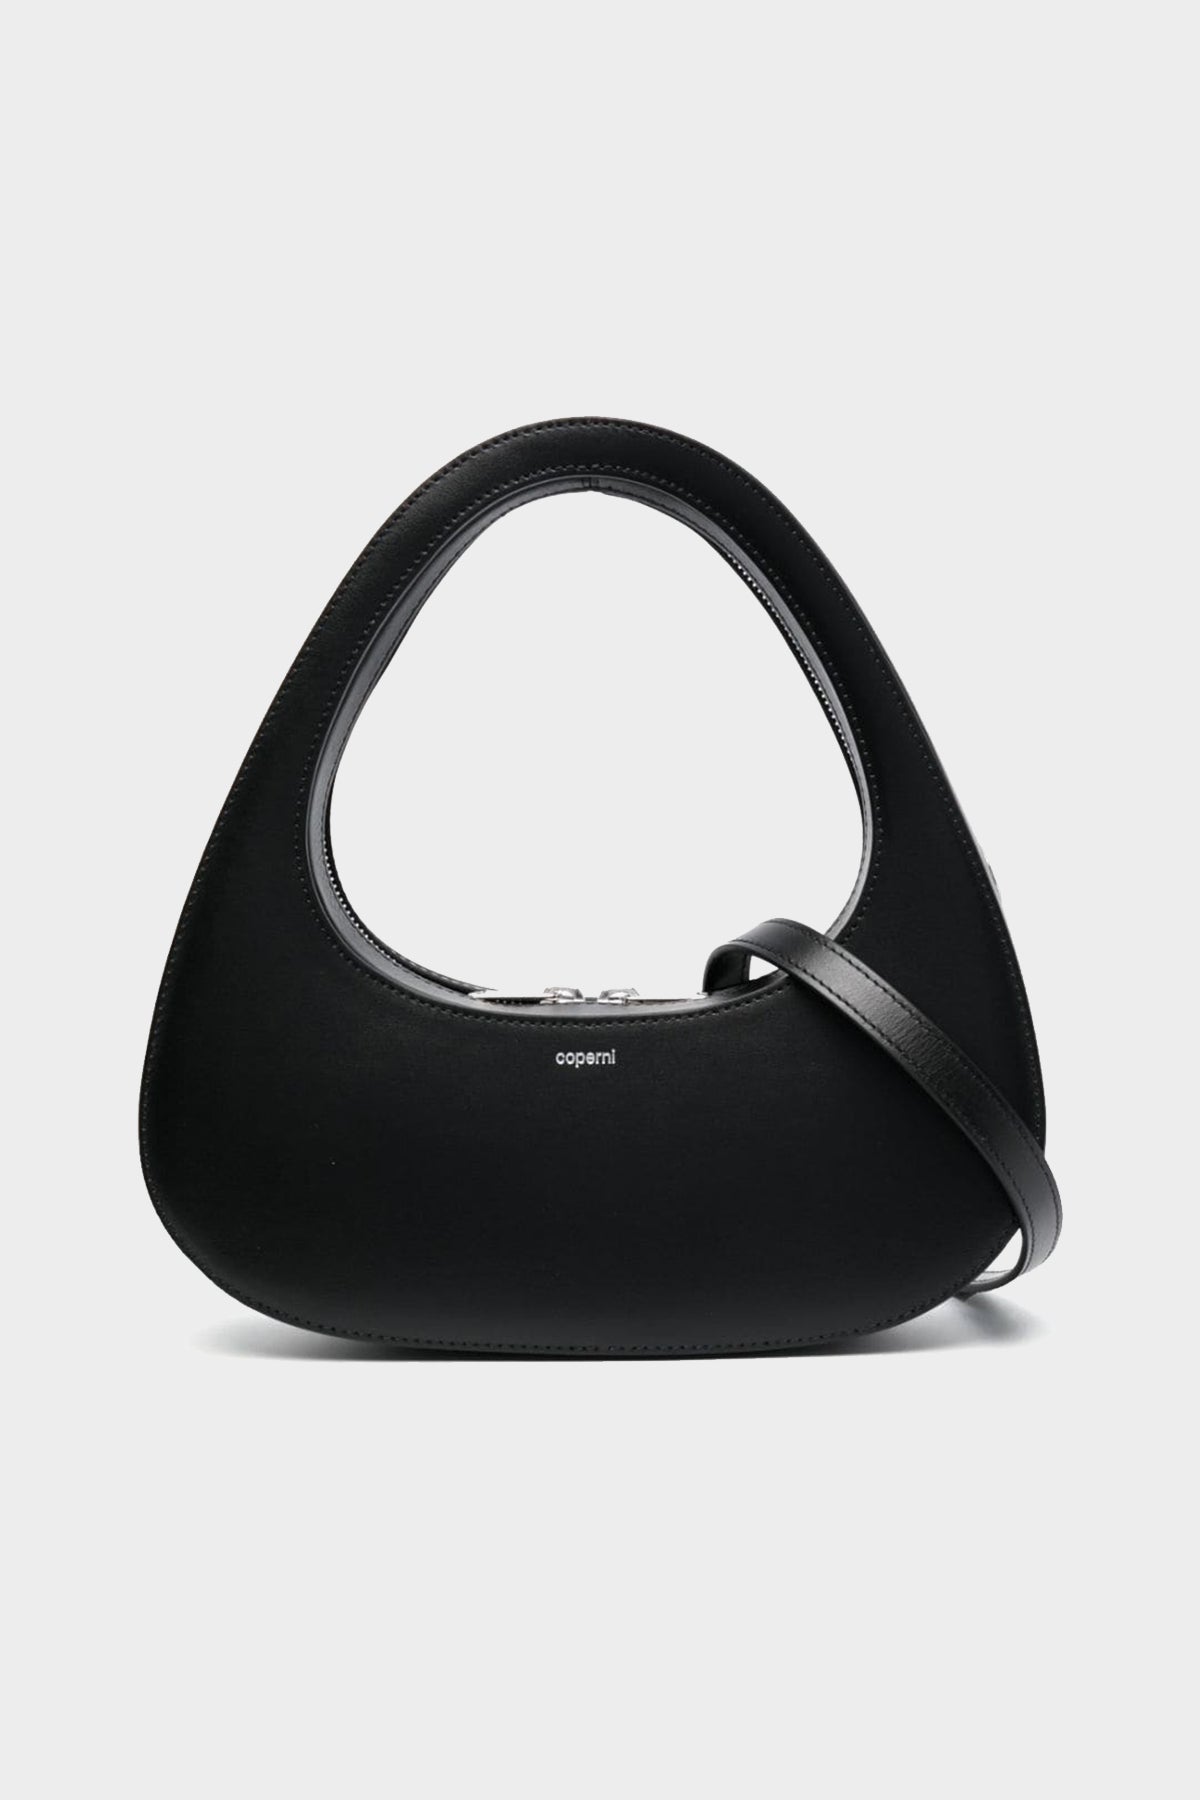 Crossbody Baguette Swipe Bag in Black - shop-olivia.com